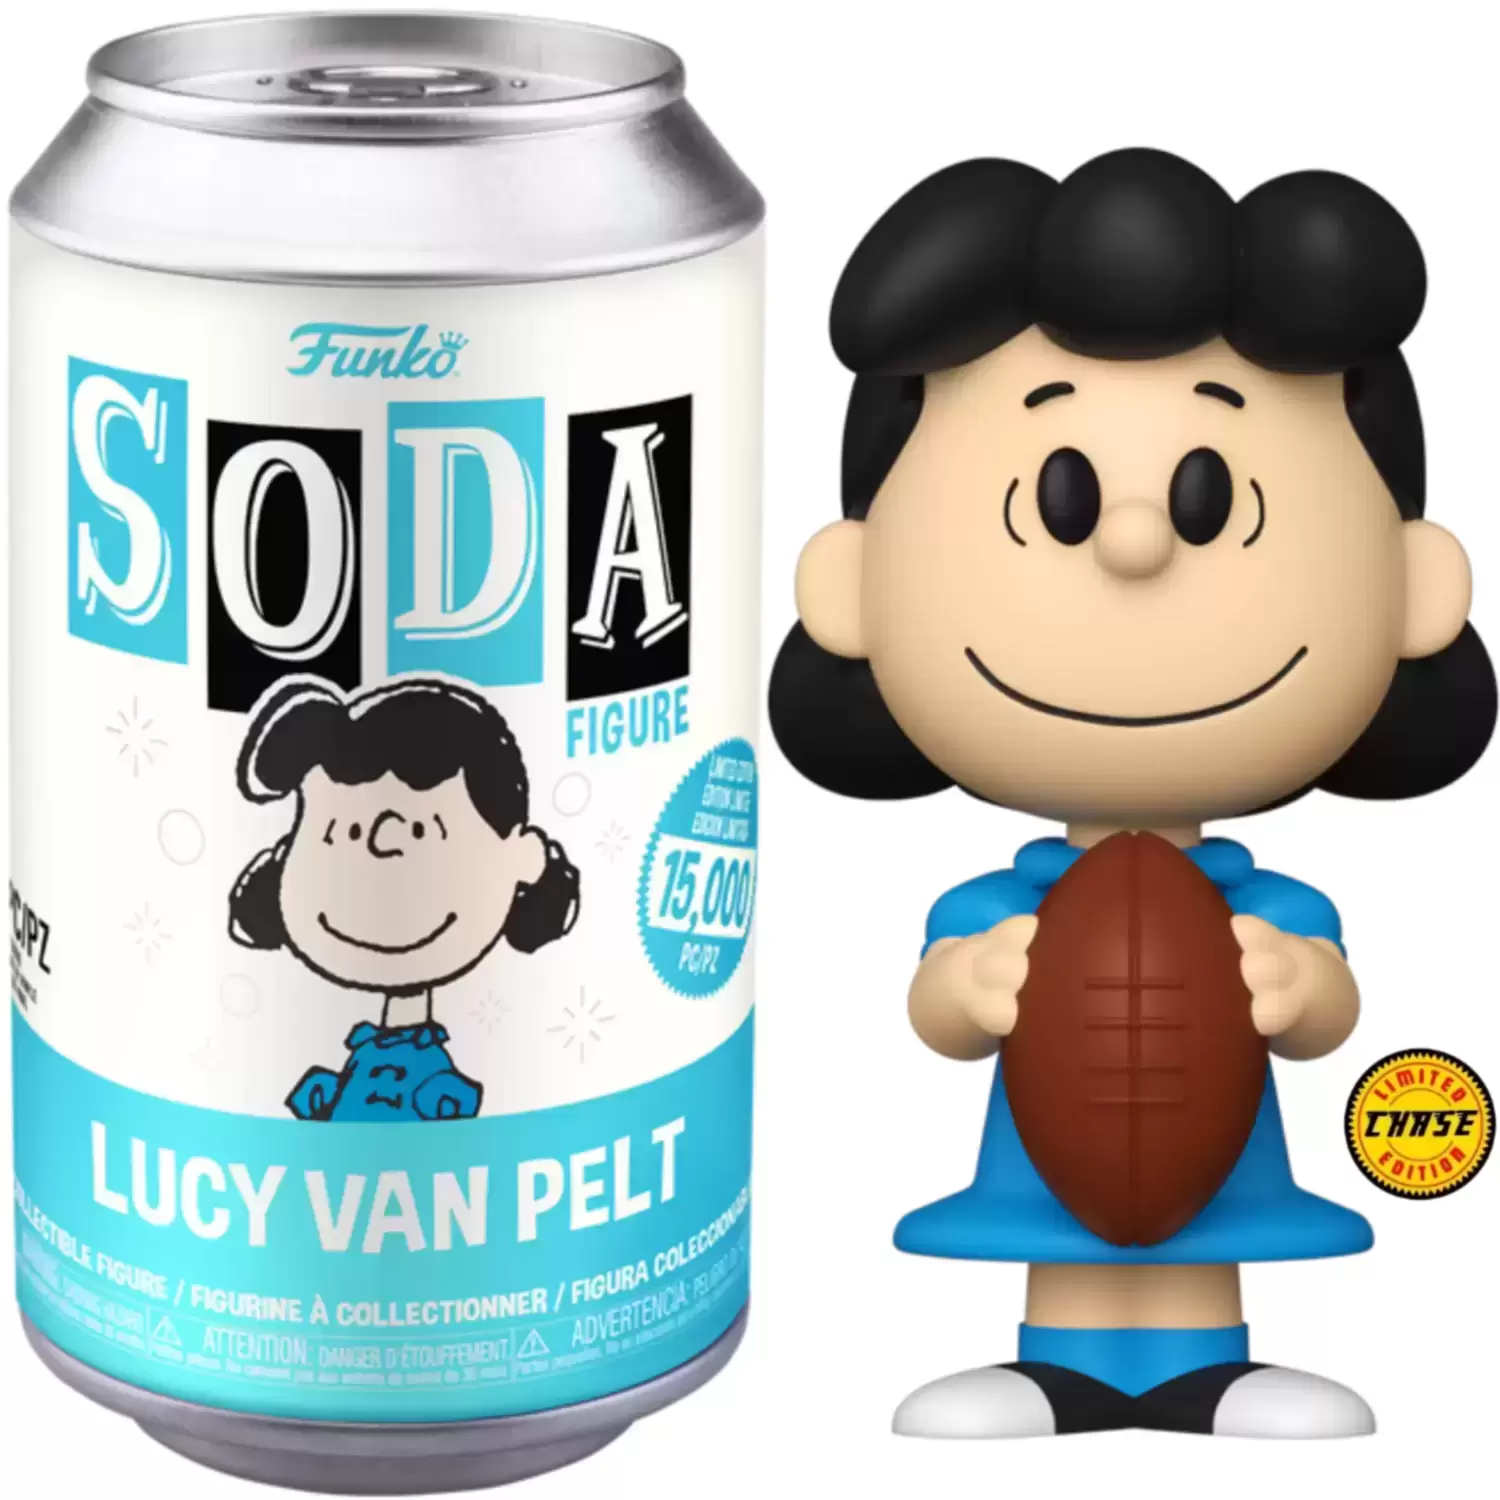 Vinyl Soda! - Peanuts - Lucy Van Pelt Chase